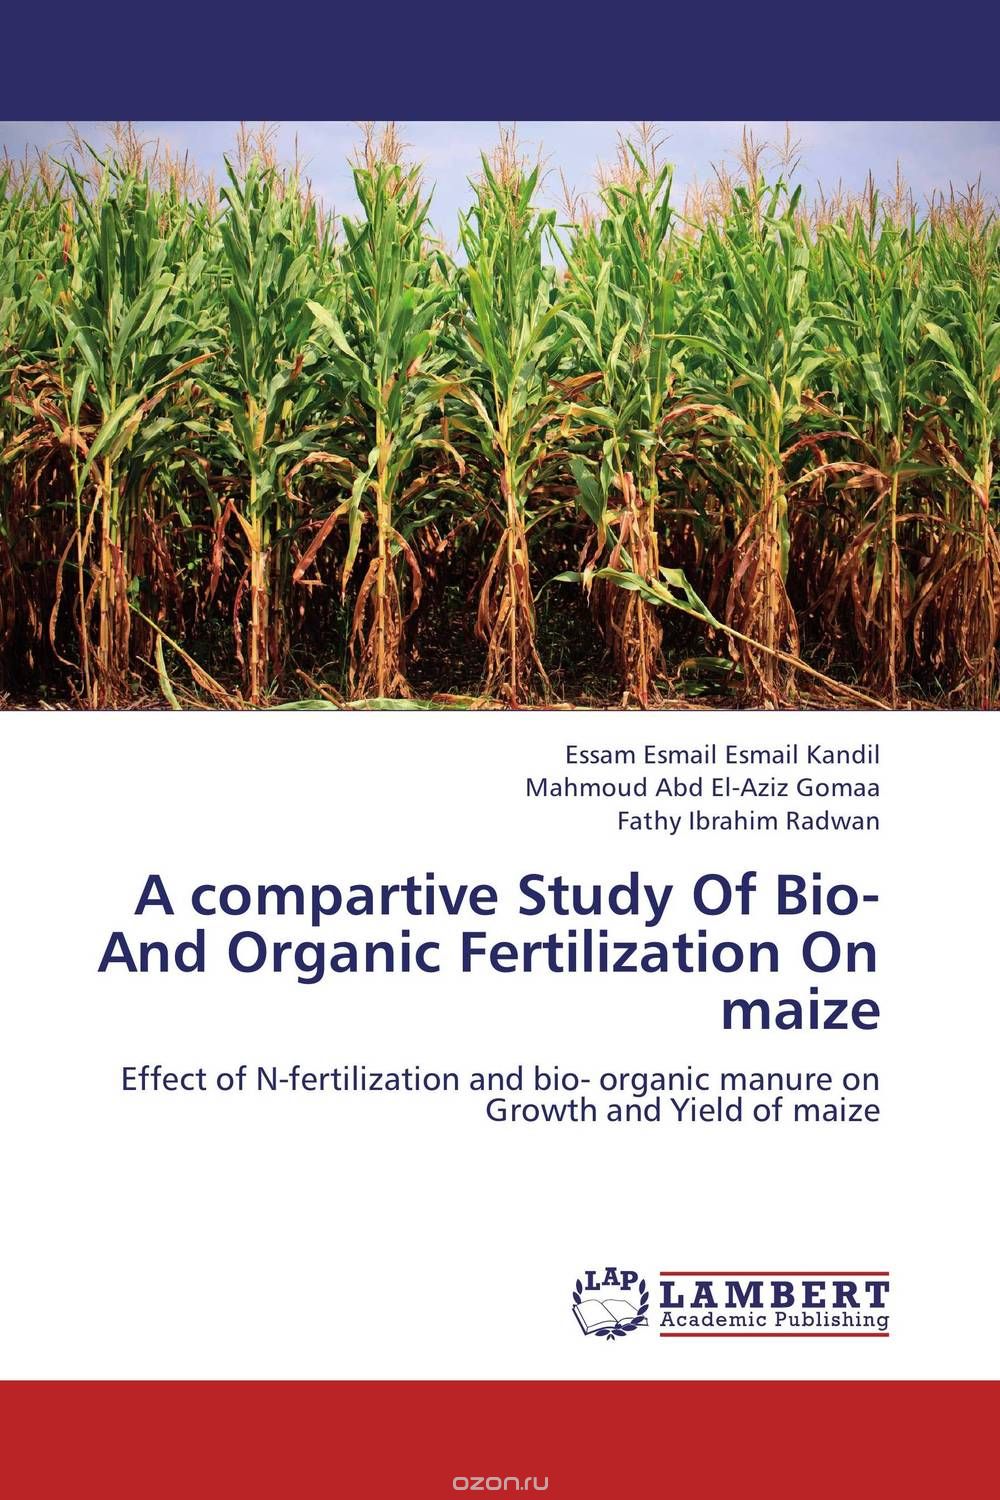 Скачать книгу "A compartive Study Of Bio- And Organic Fertilization On maize"